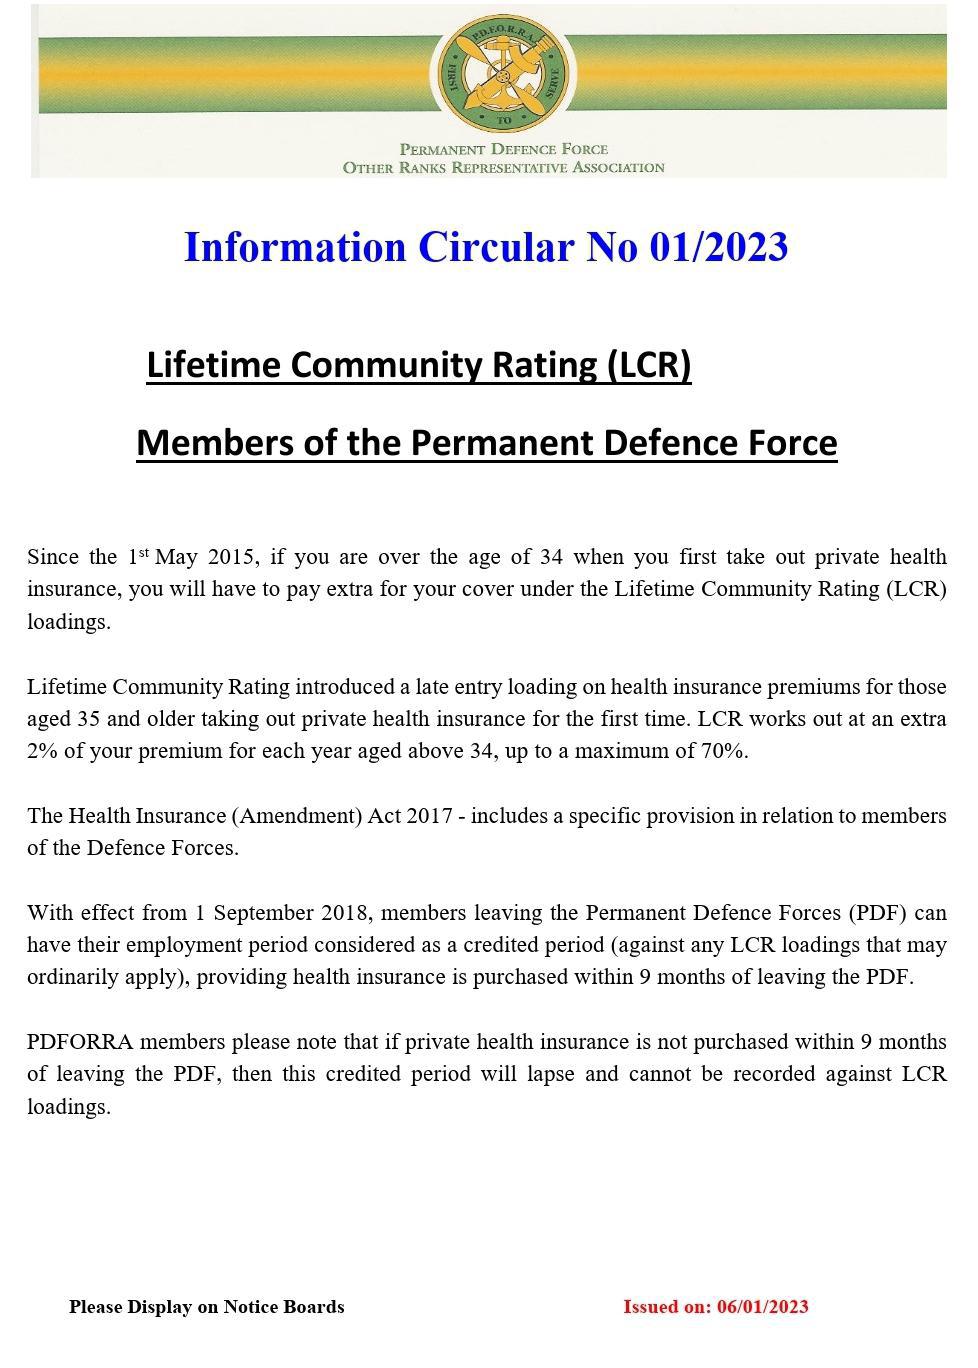 Information Circular No 01 of 23 - Lifetime Community Rating